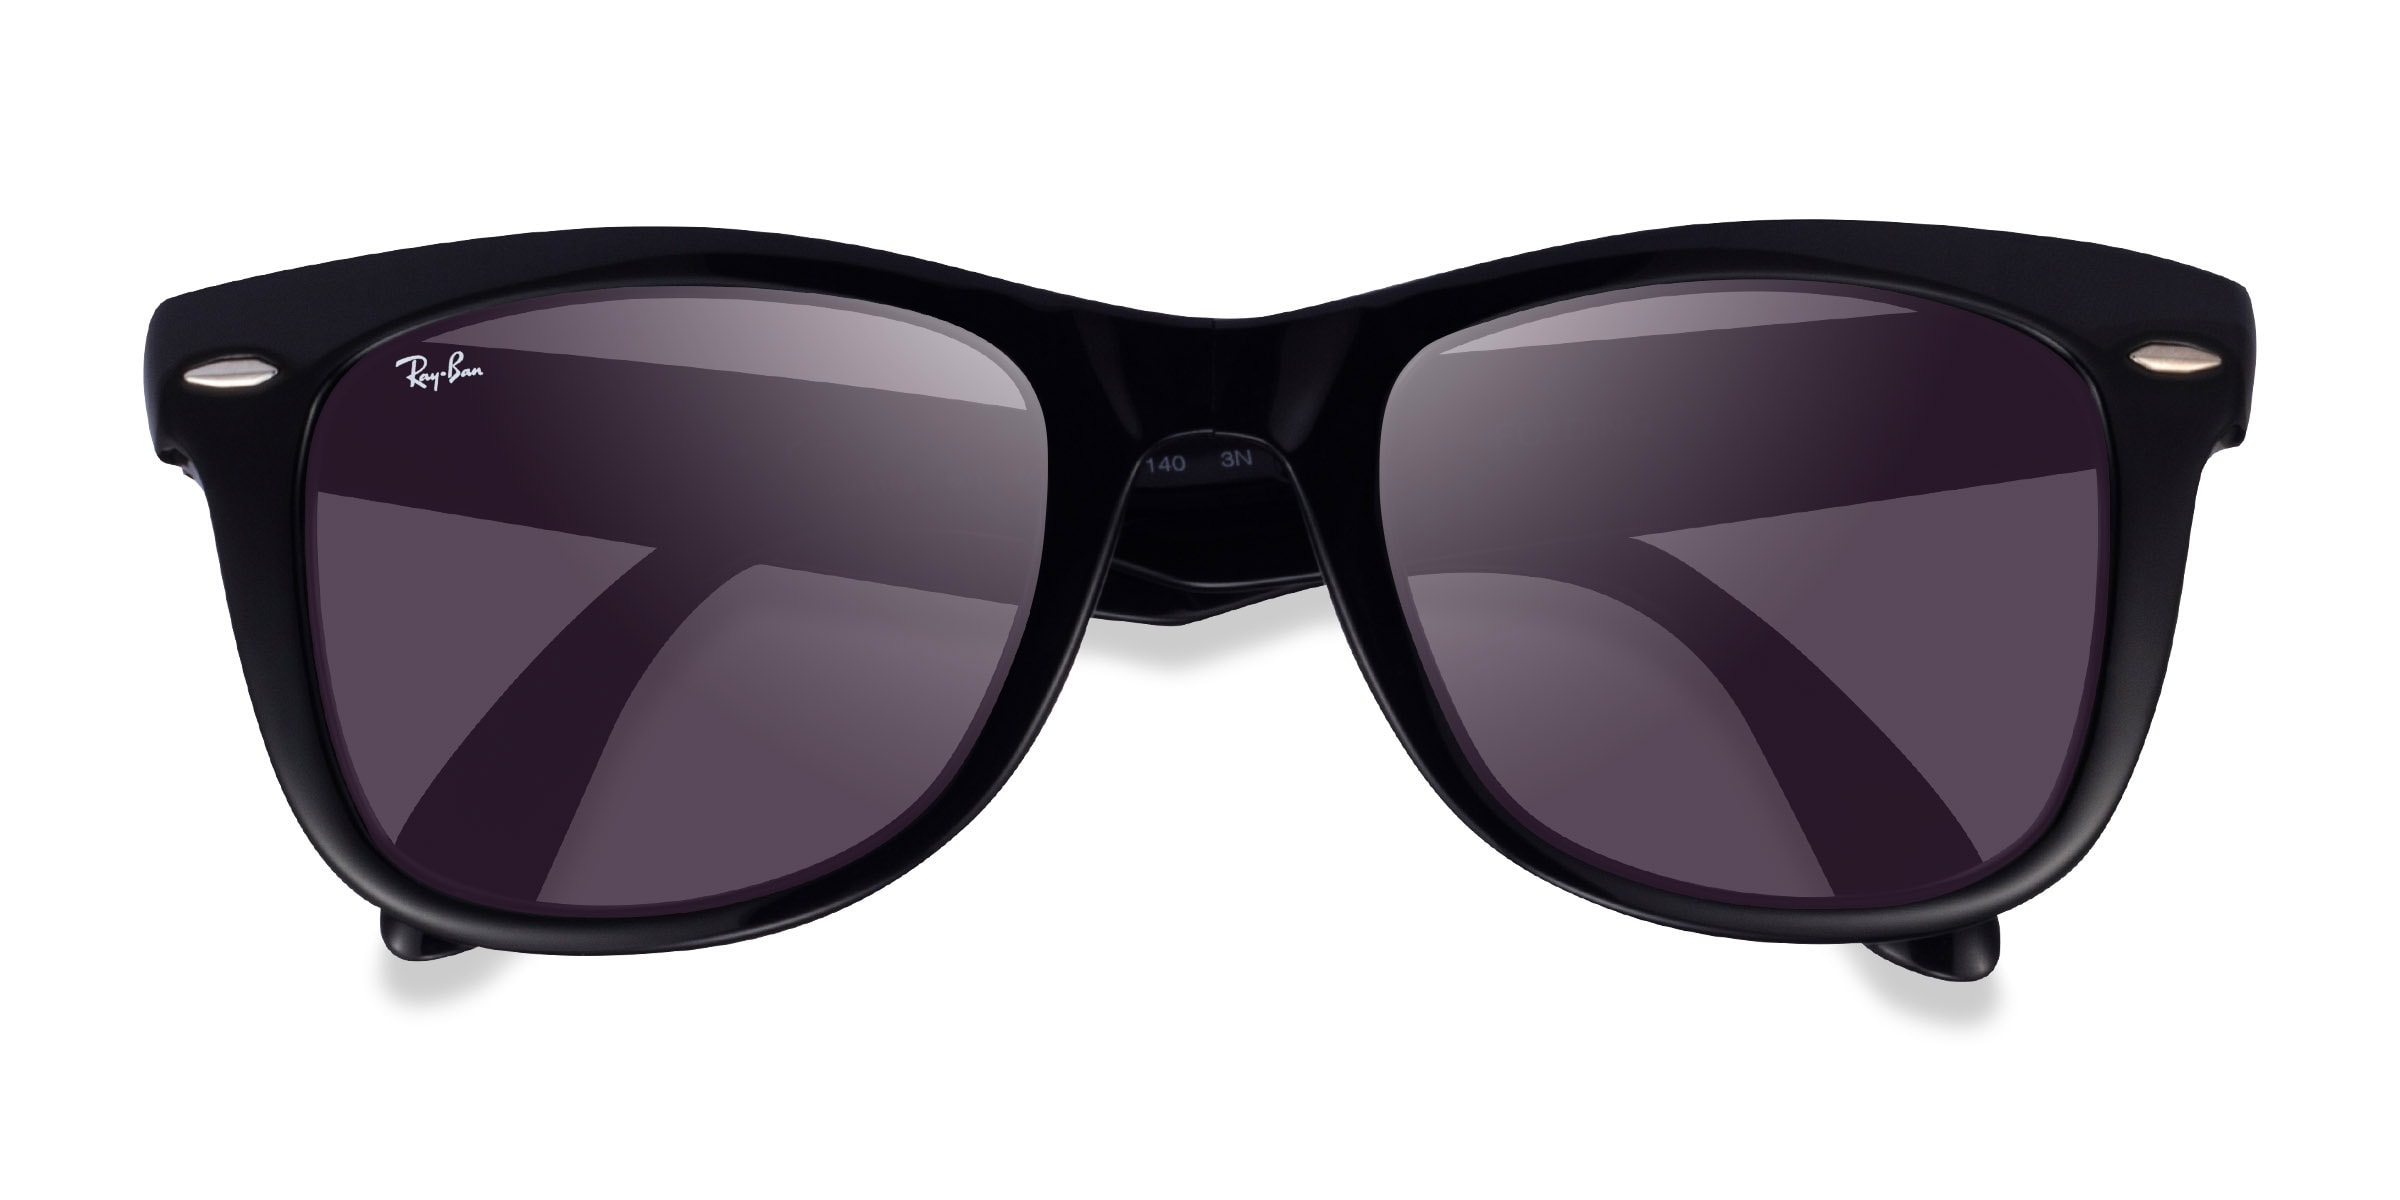 Ray-Ban RB4105 - Square Black Frame Prescription Sunglasses 